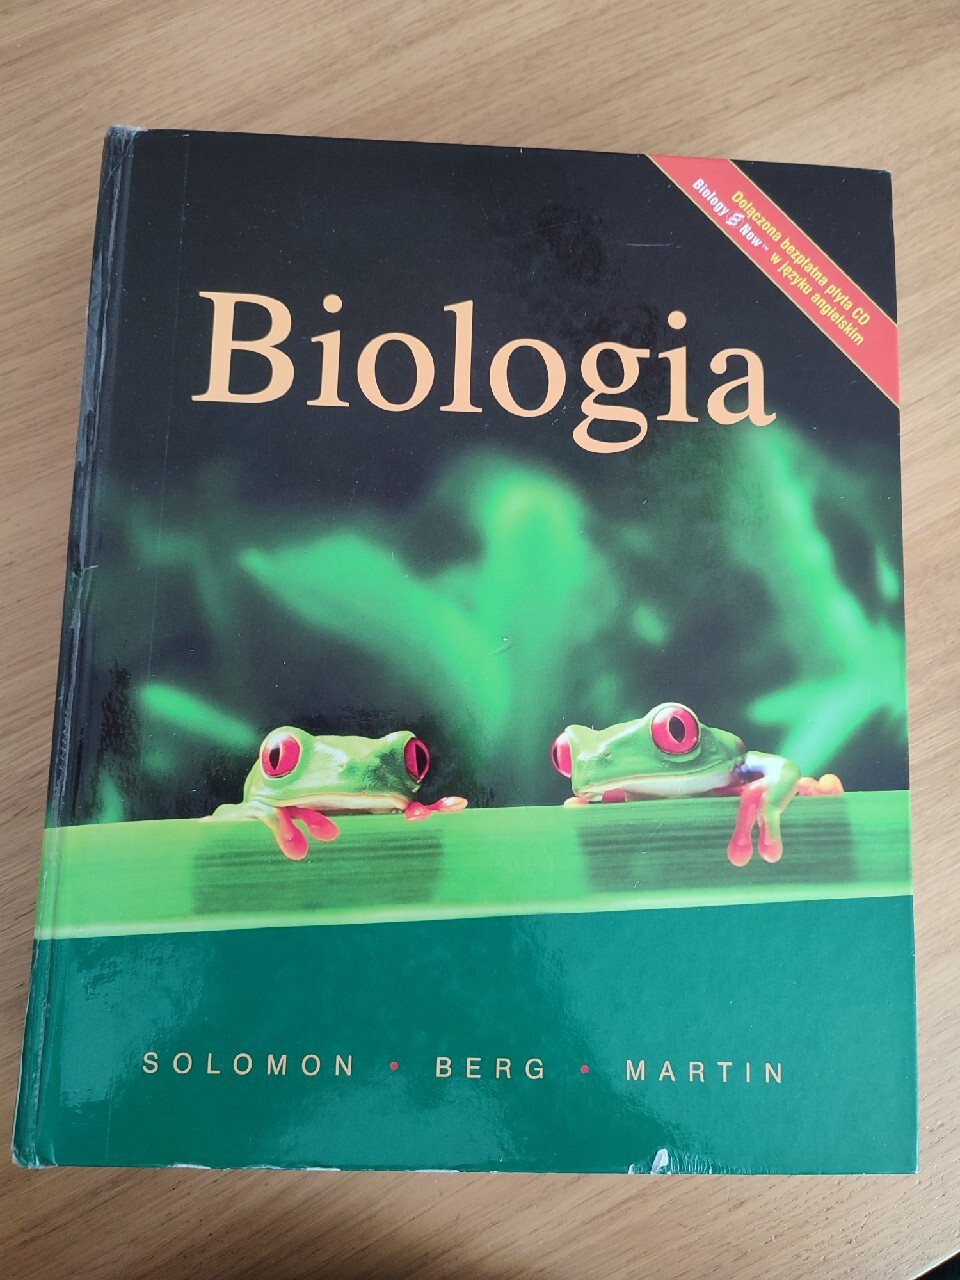 Biologia Solomon Berg Martin | Mysłowice | Kup teraz na Allegro Lokalnie